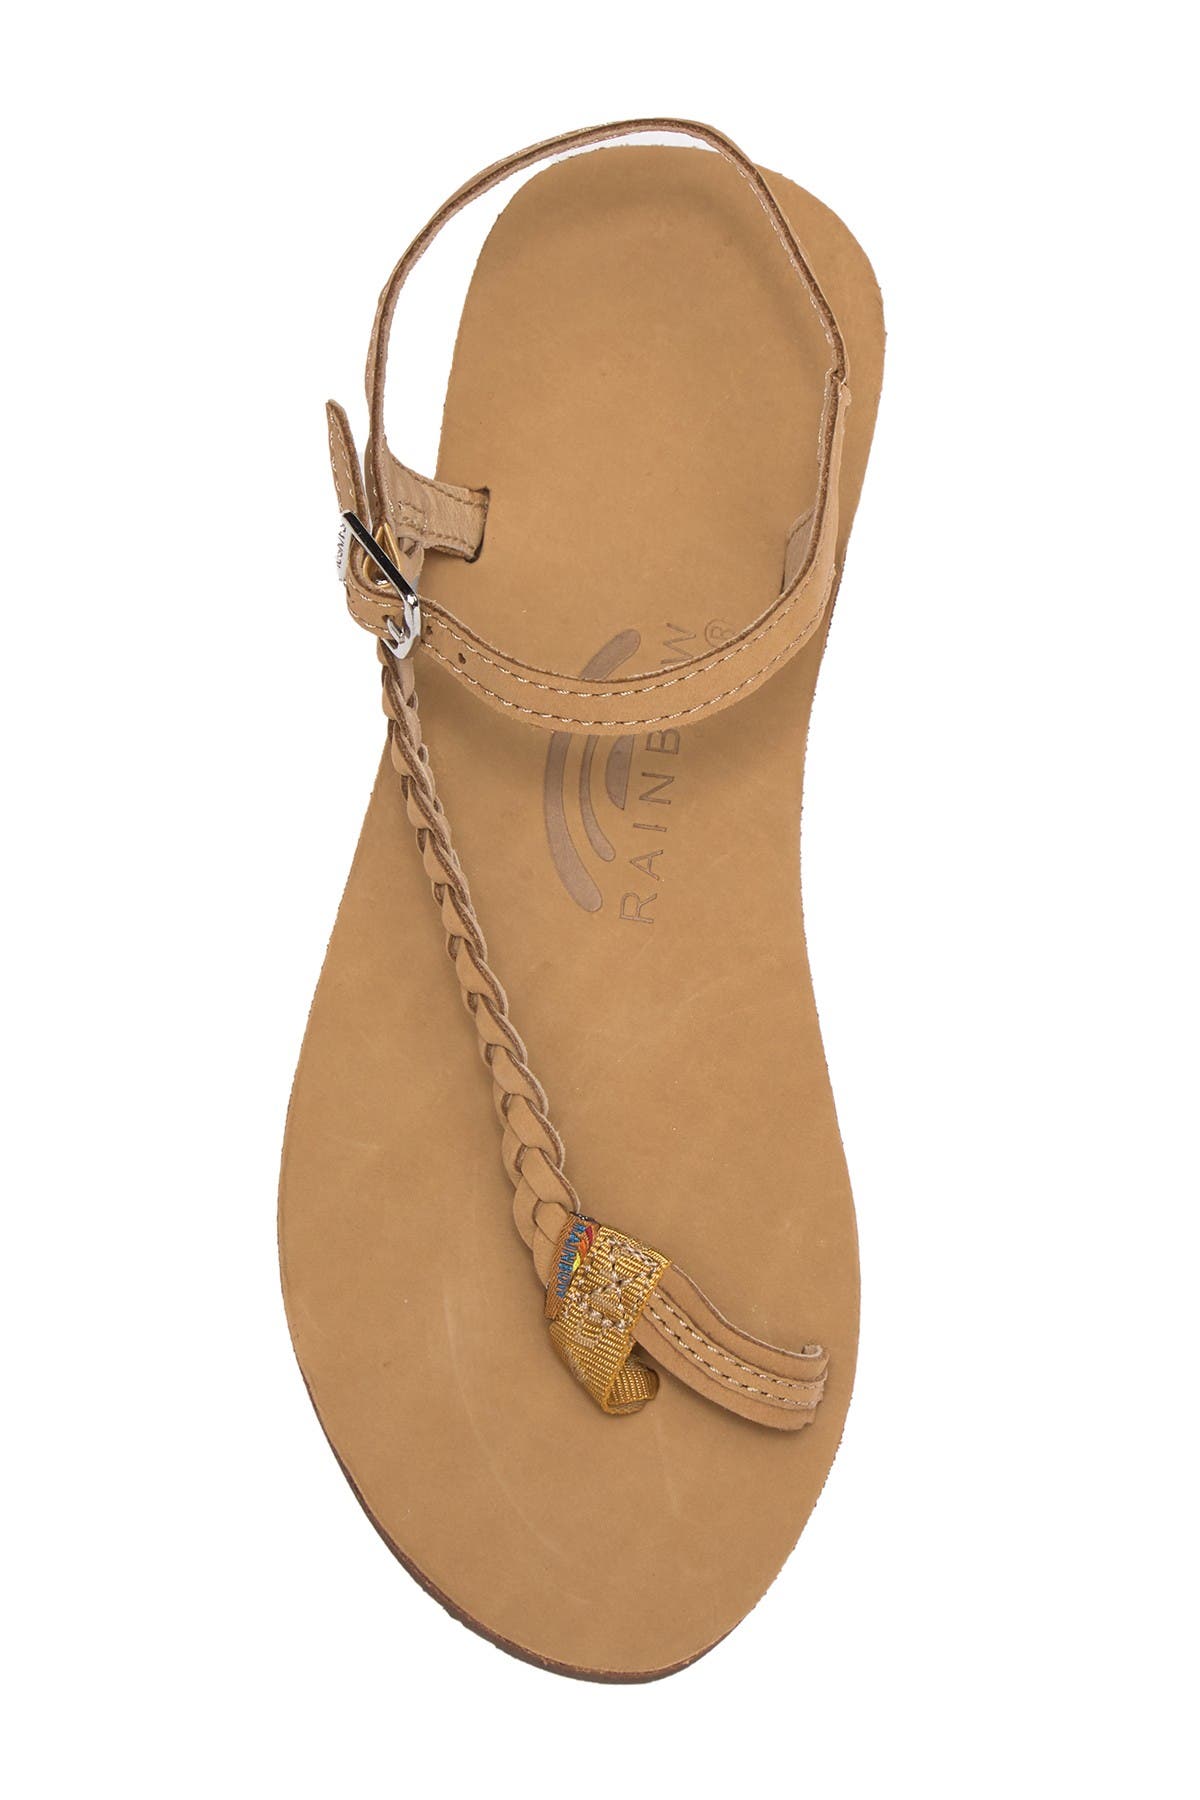 rainbow sandals marley